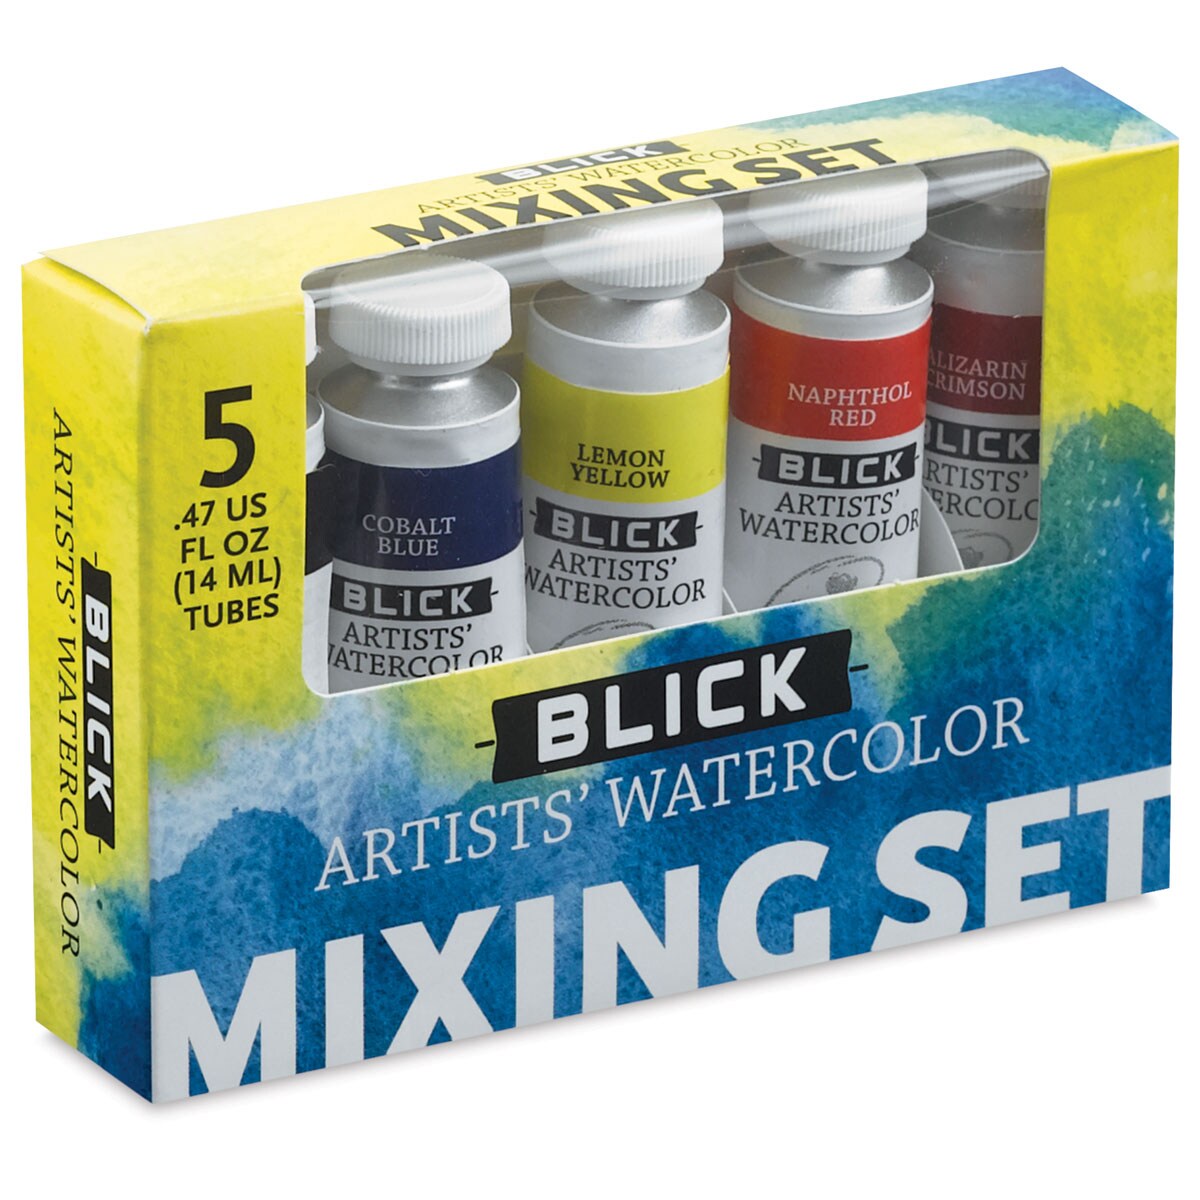 Blick Artists&#x27; Watercolors - Mixing Set, Set of 5 colors, 14 ml tubes